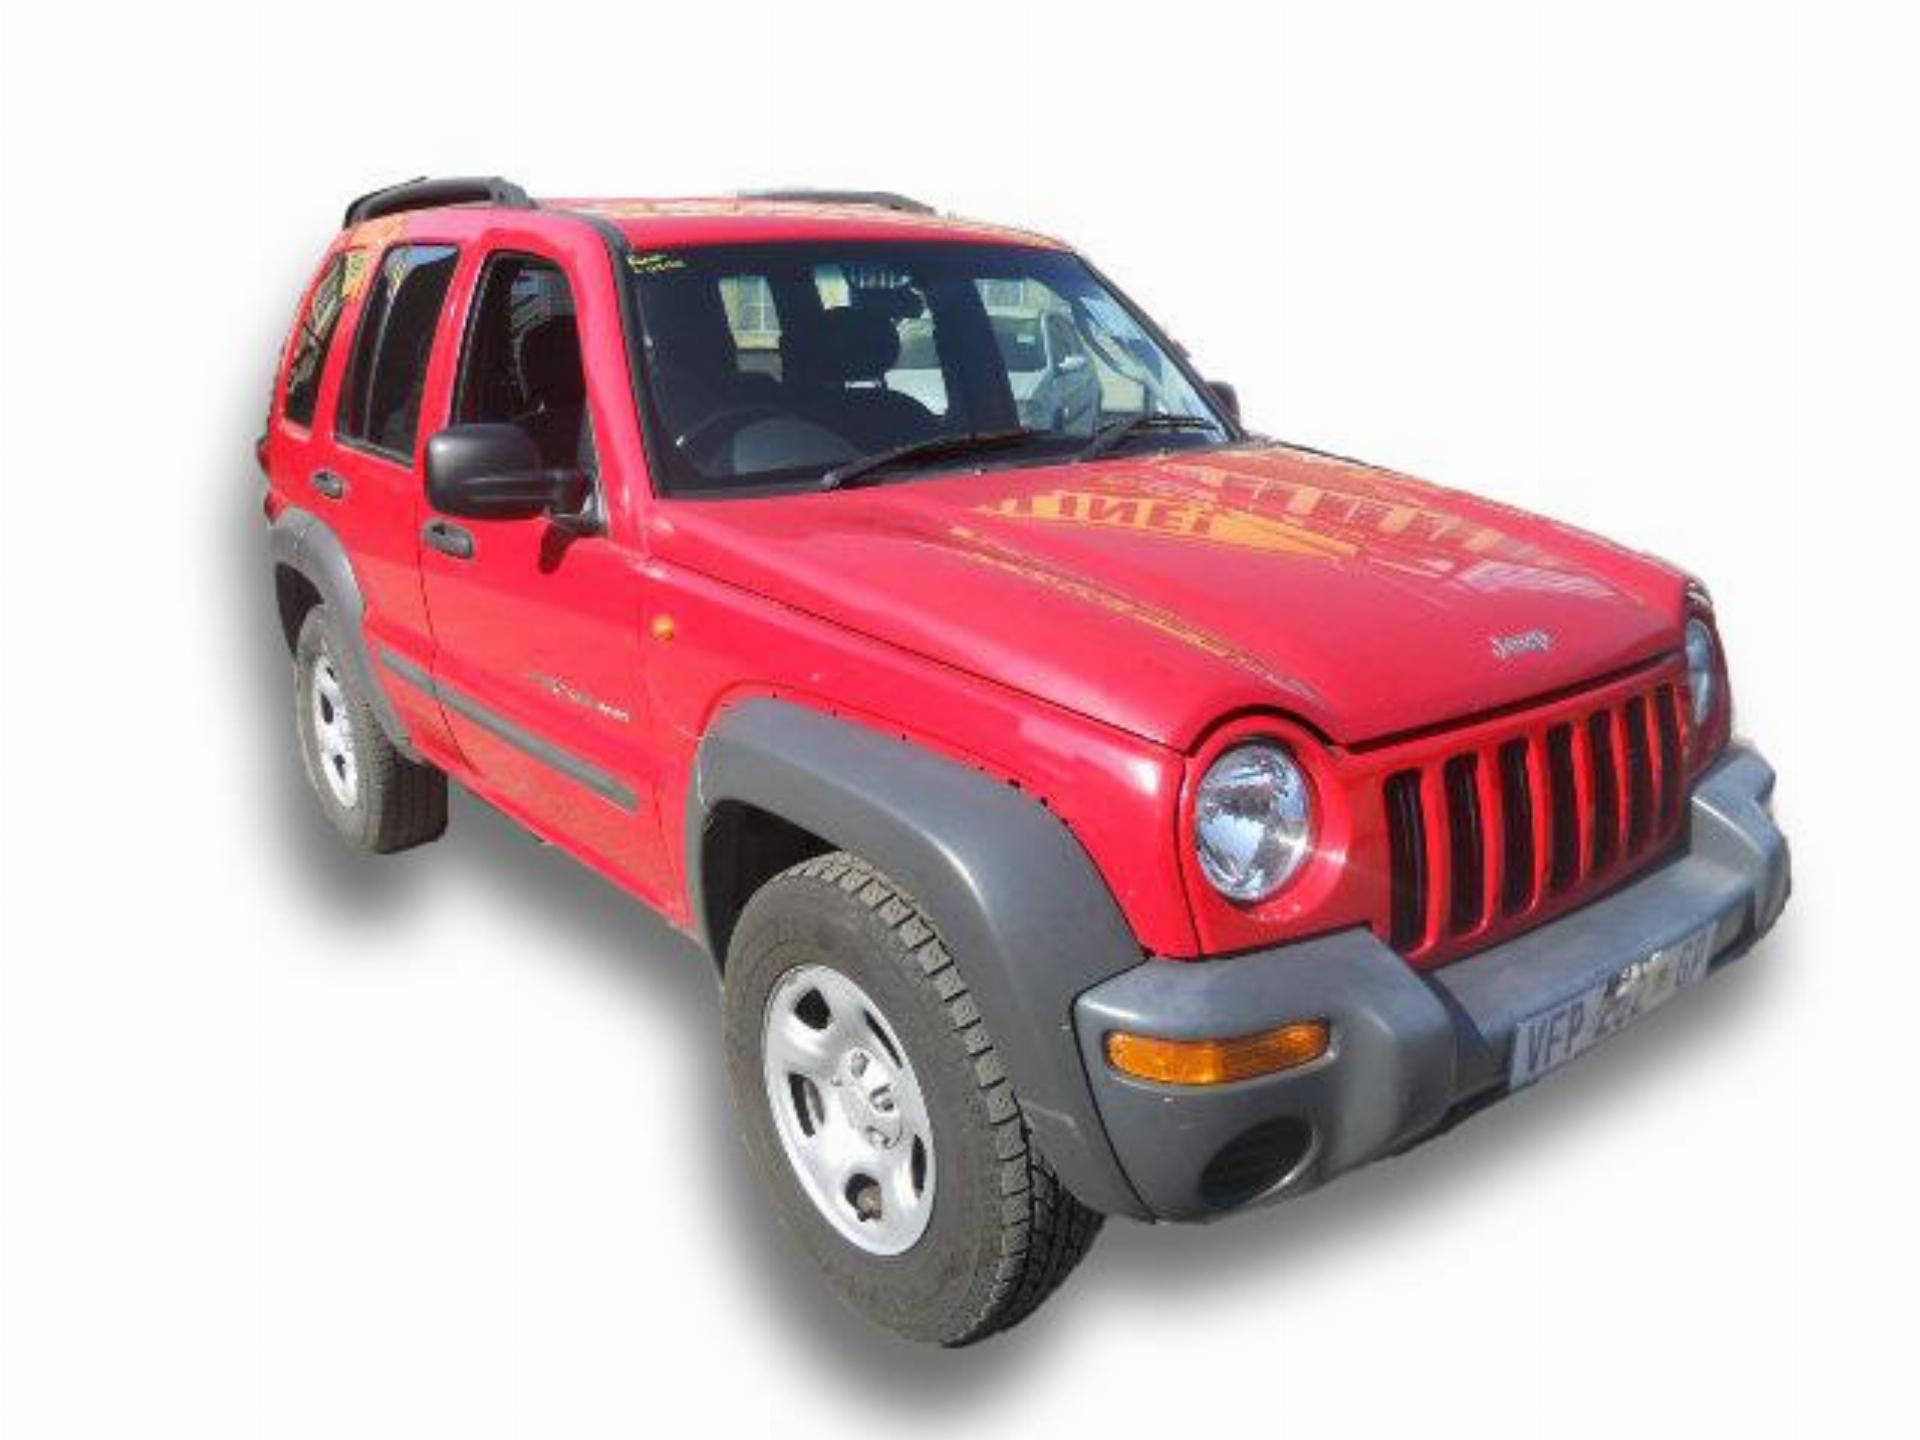 Repossessed Jeep Cherokee 3.7 2003 on auction MC21694